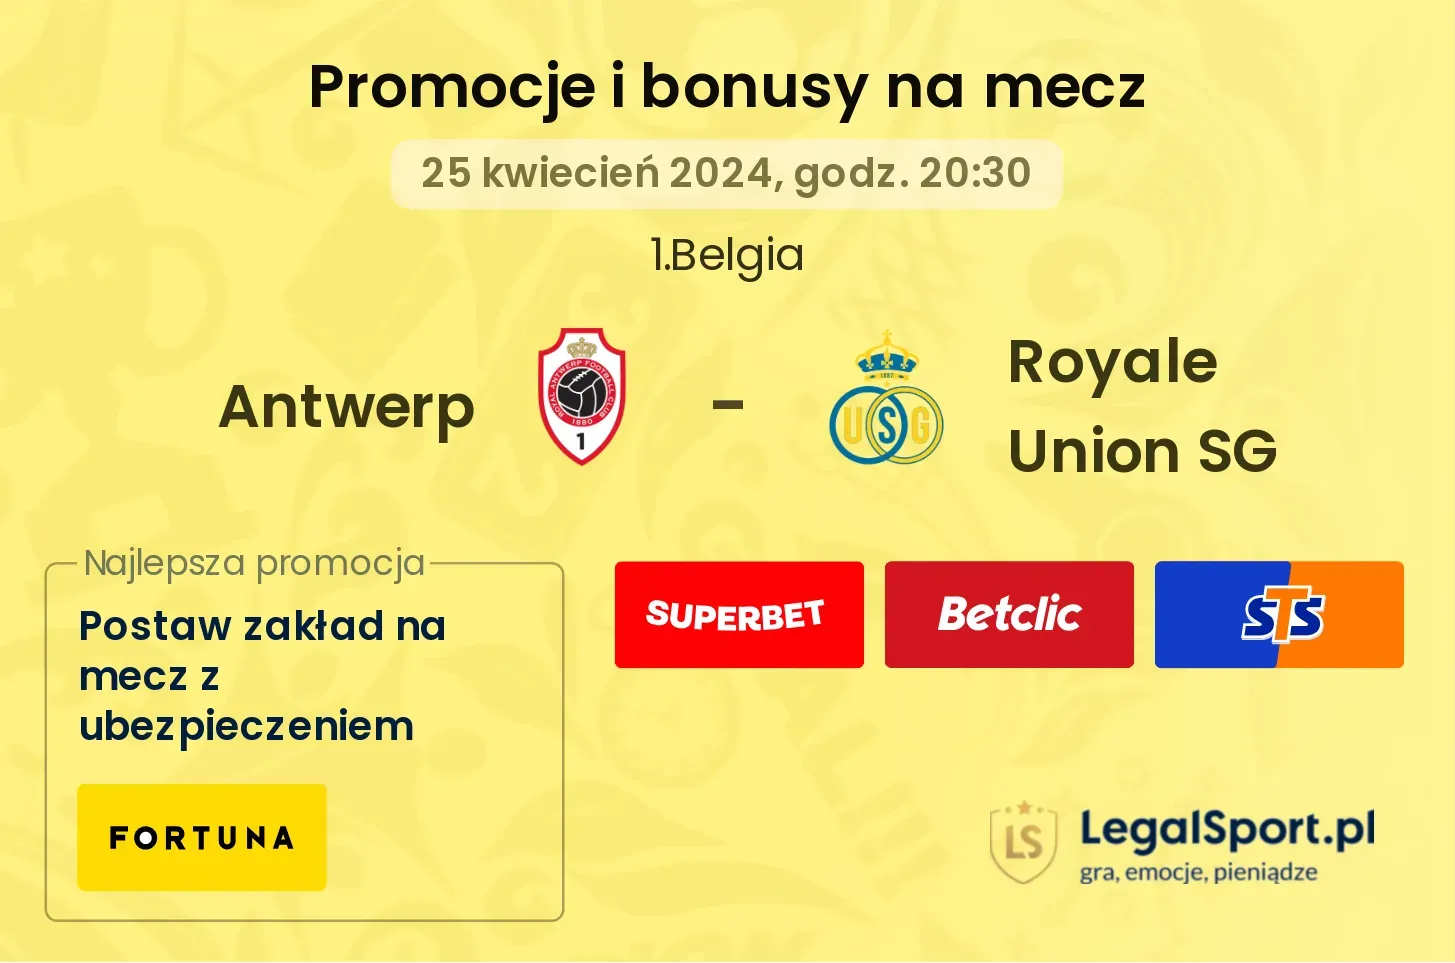 Antwerp - Royale Union SG promocje bonusy na mecz